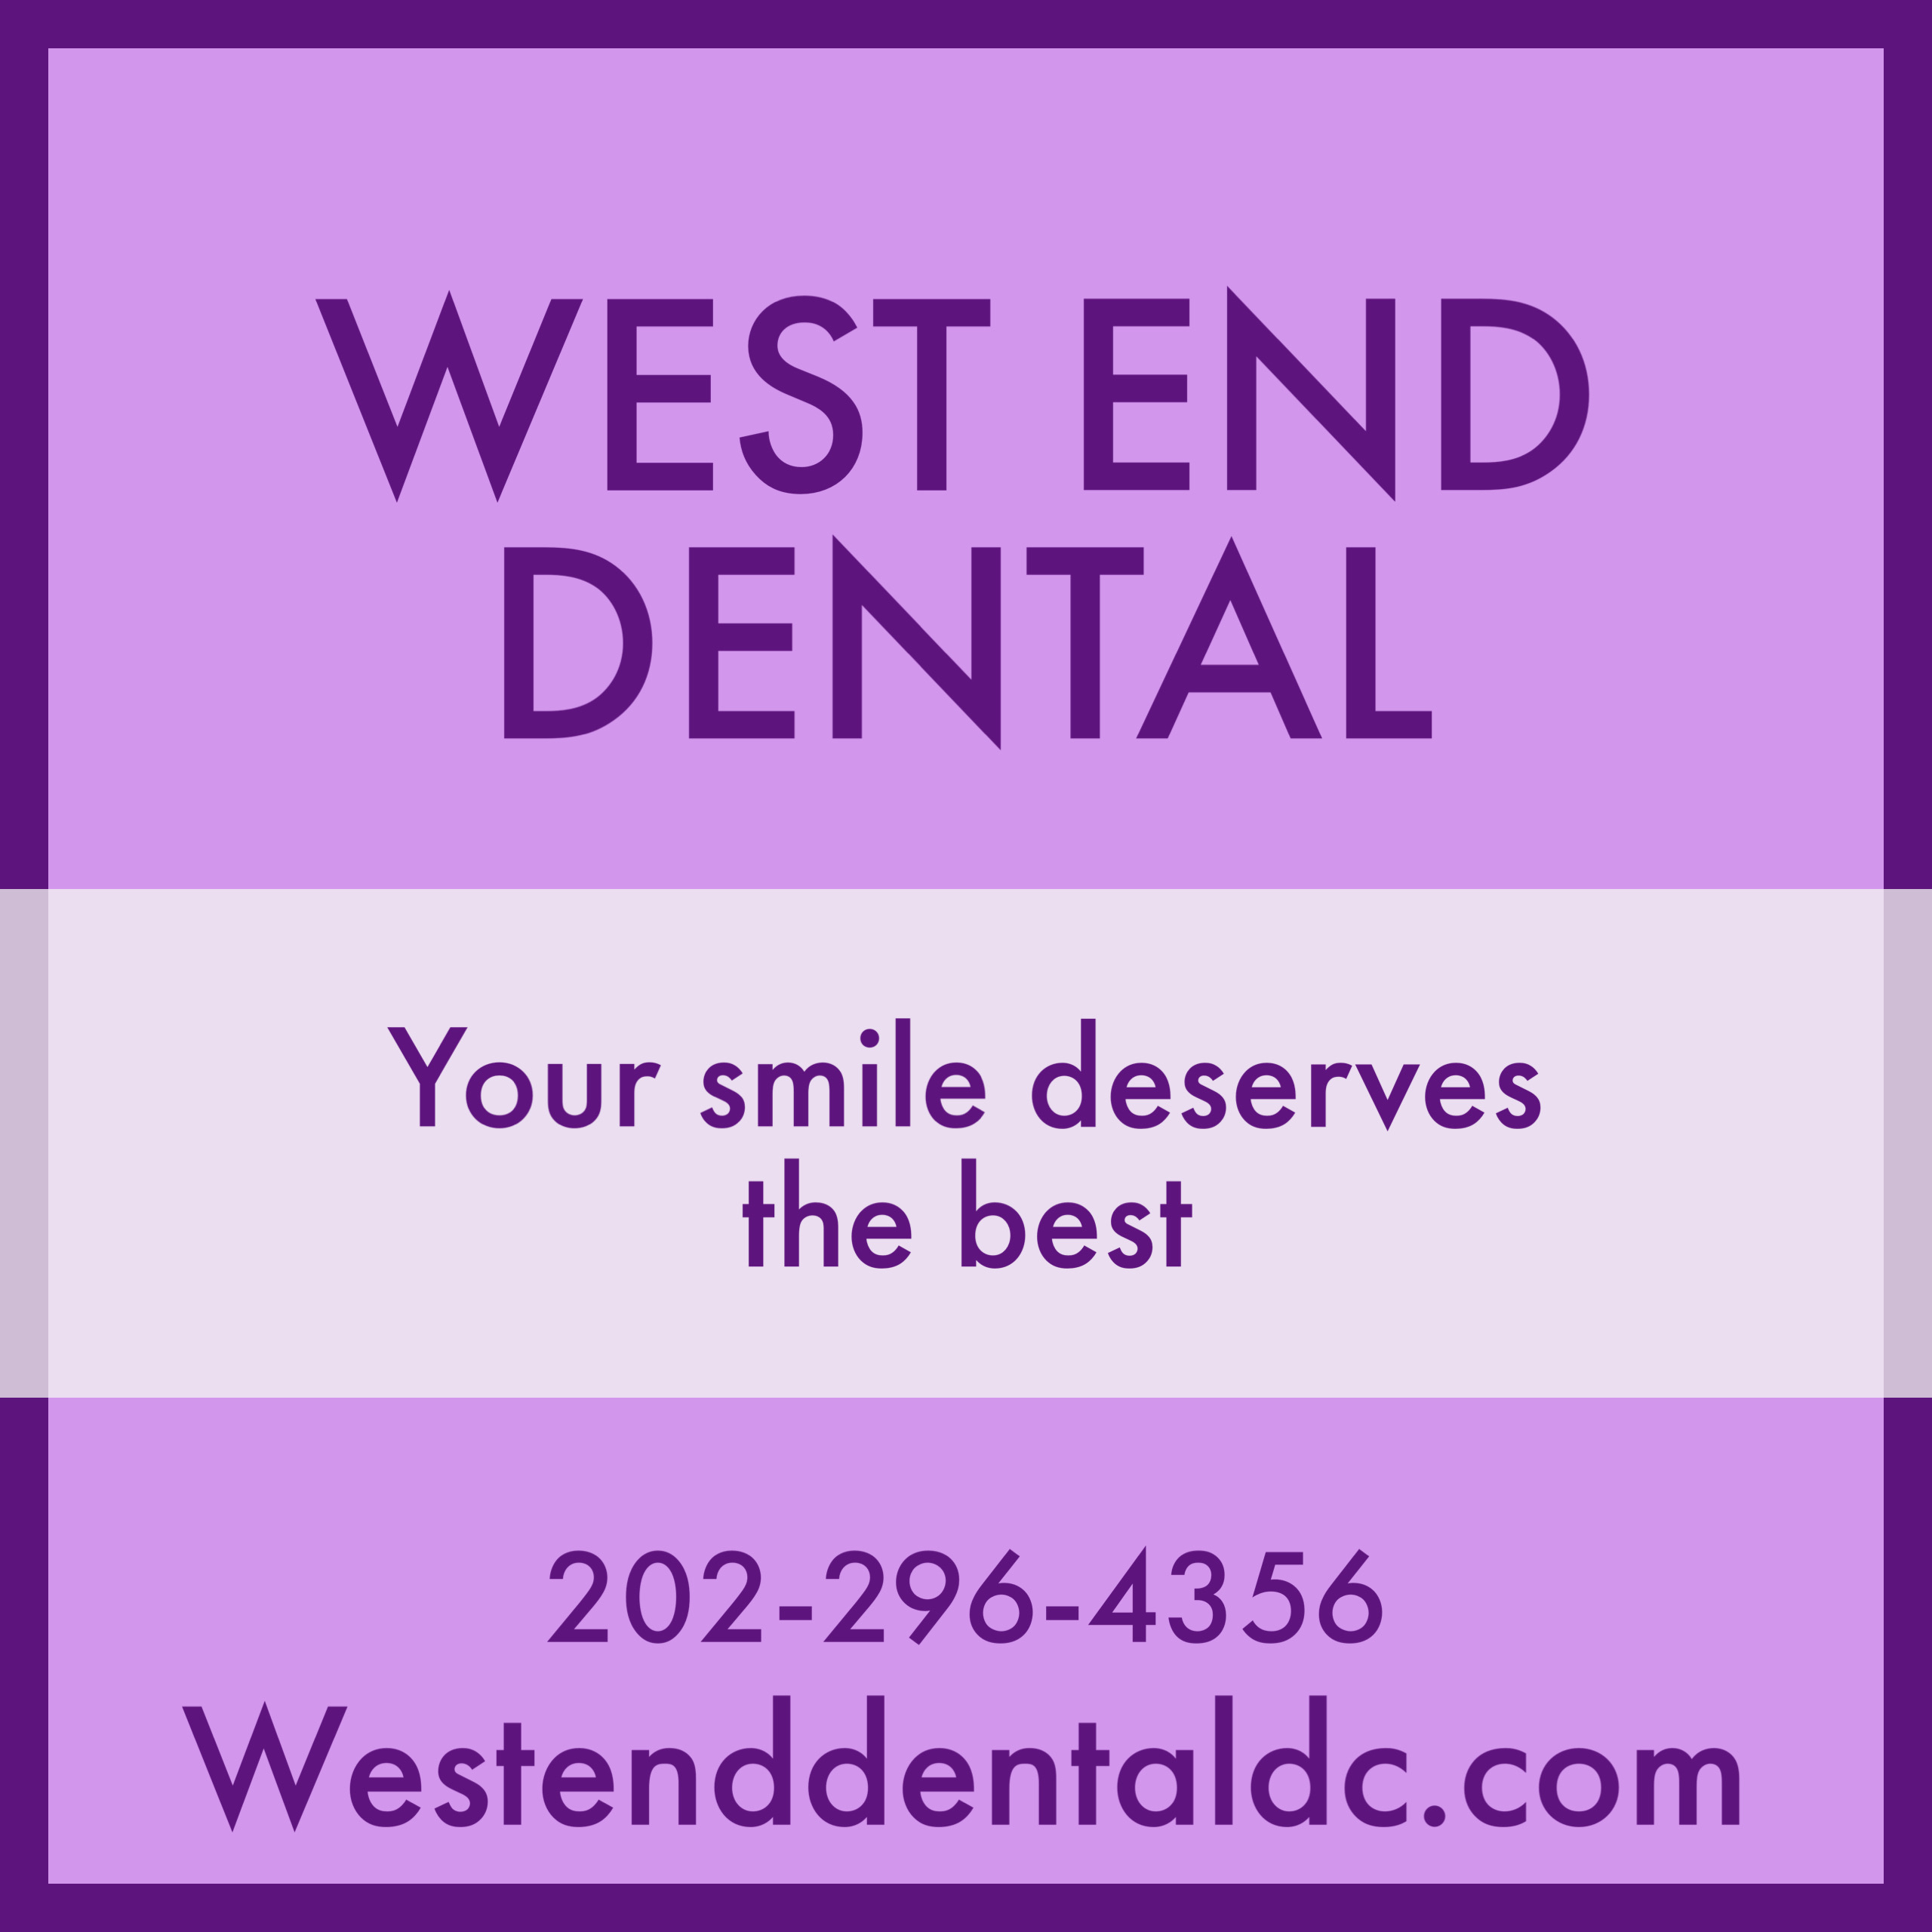 West End Dental - Ad